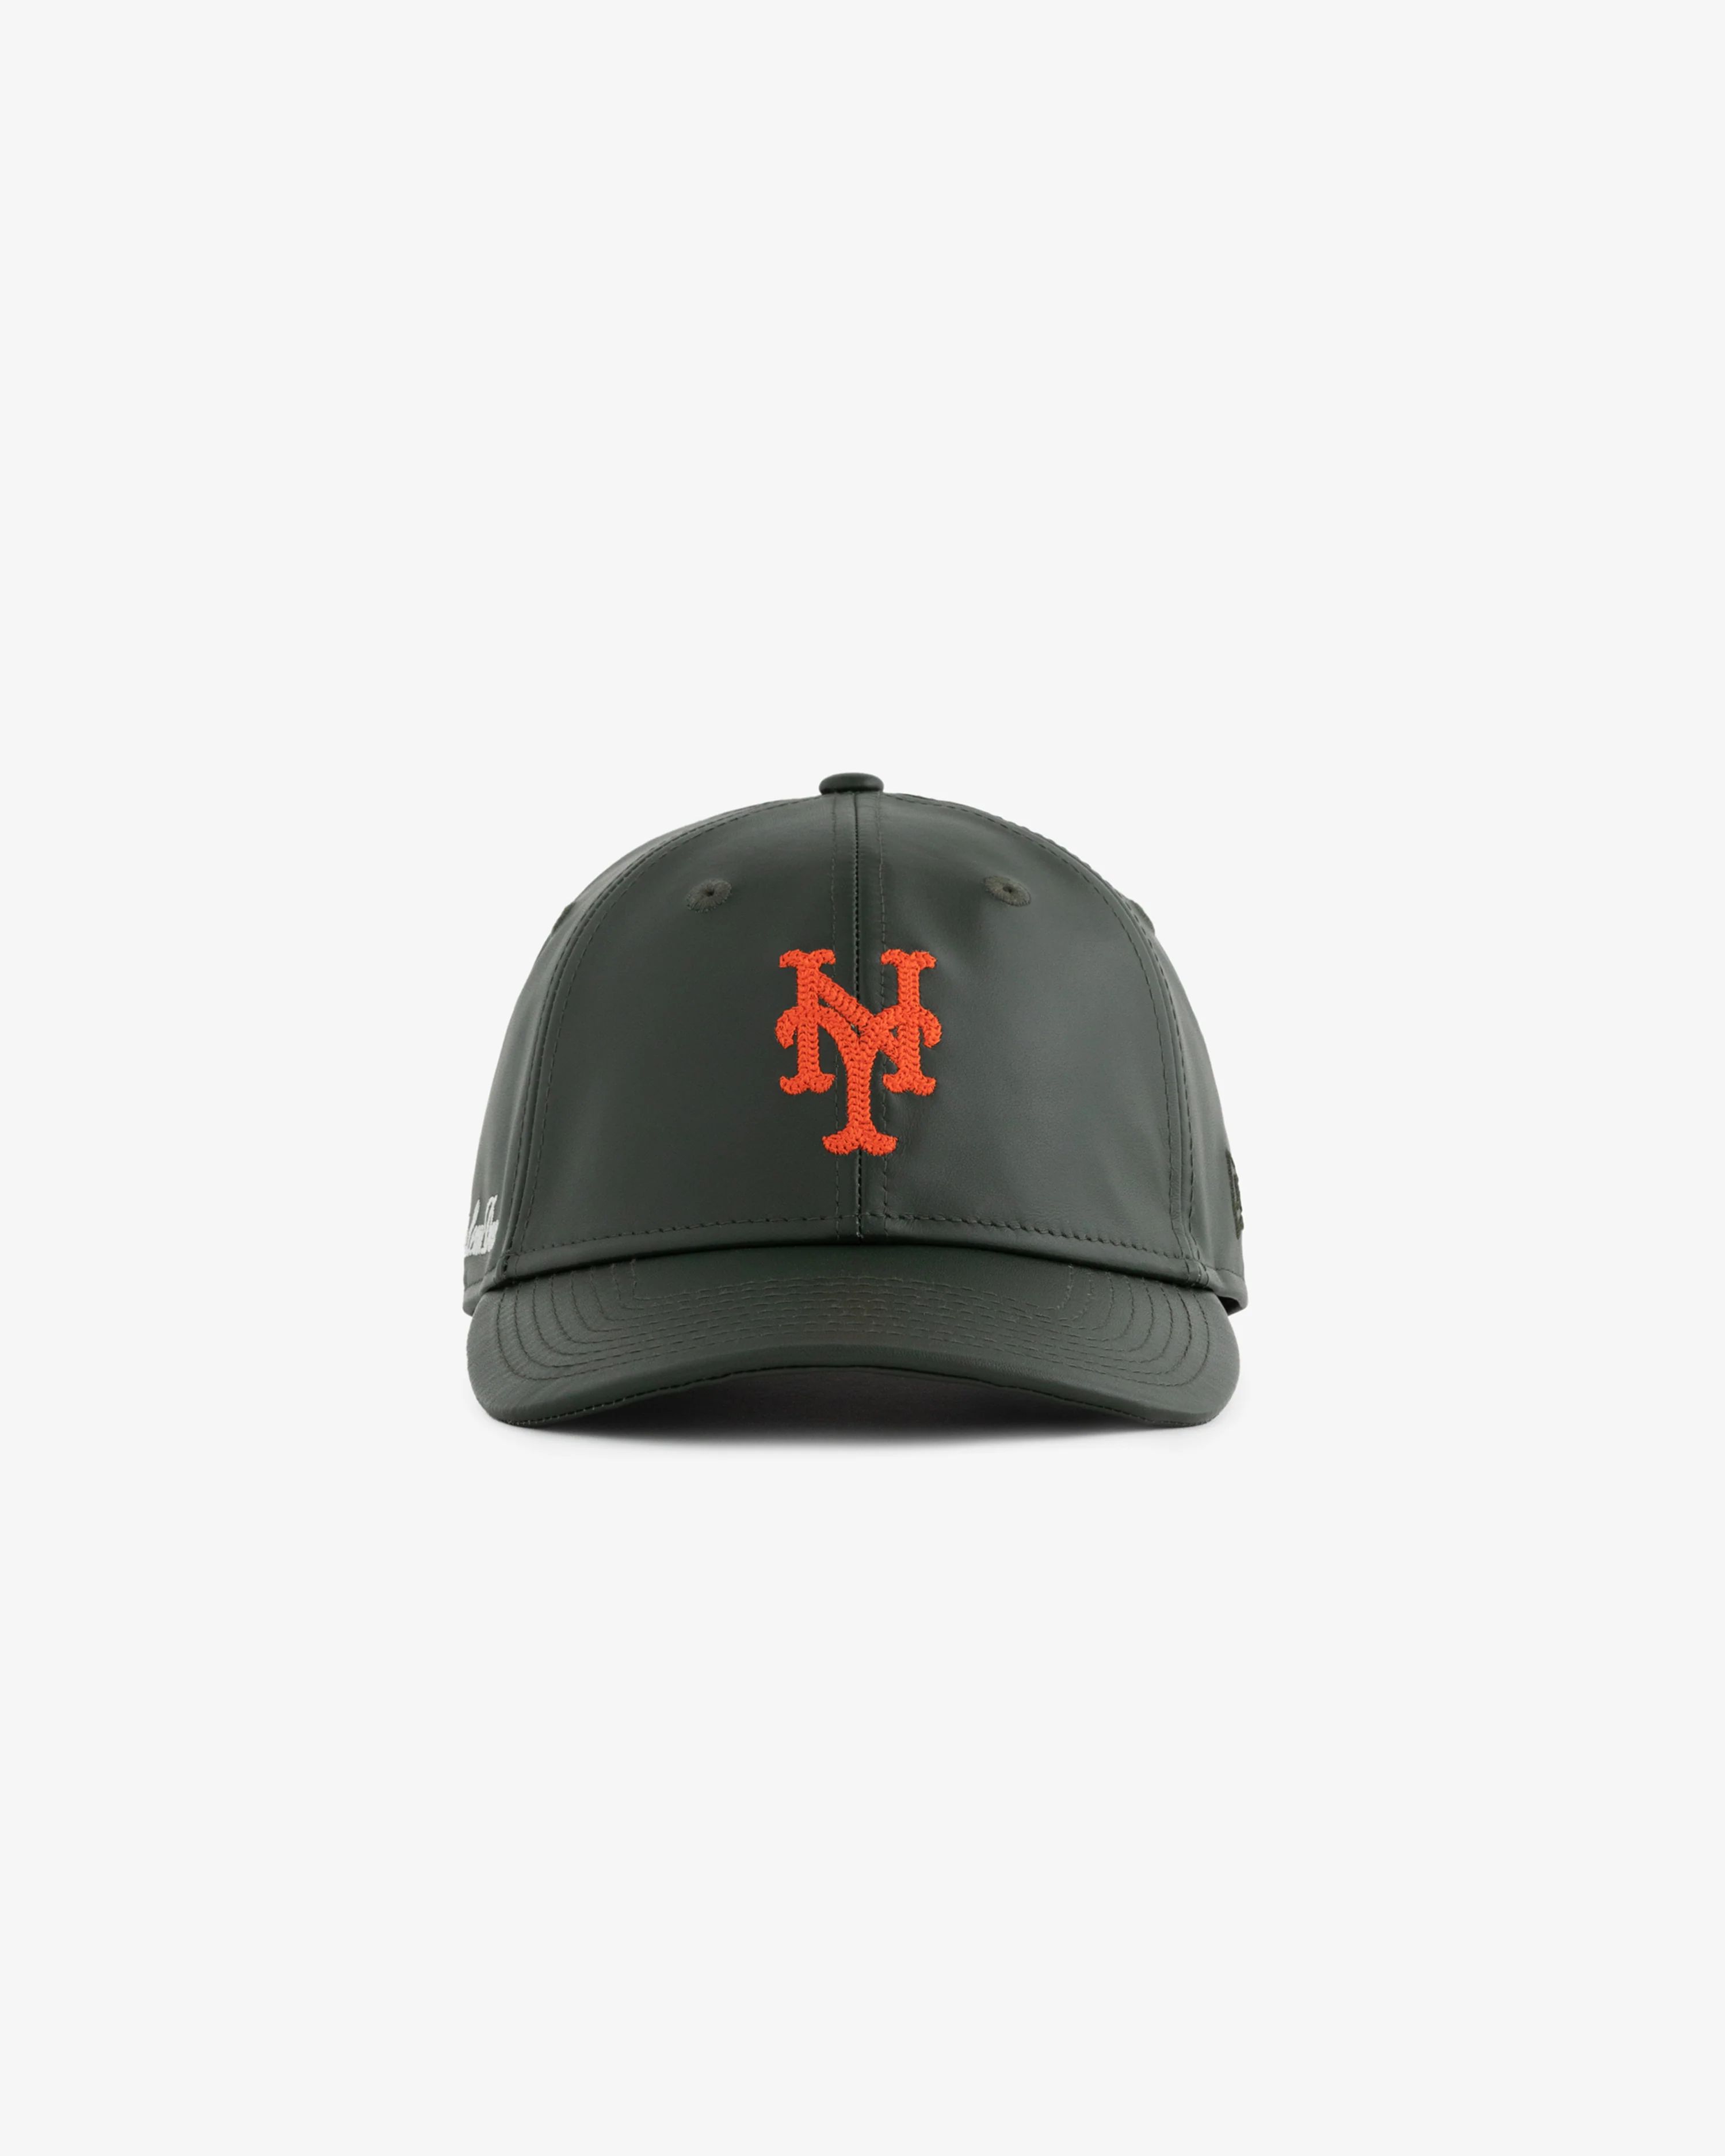 New Era ALD / New Era Mets Leather Ballpark Hat | Grailed